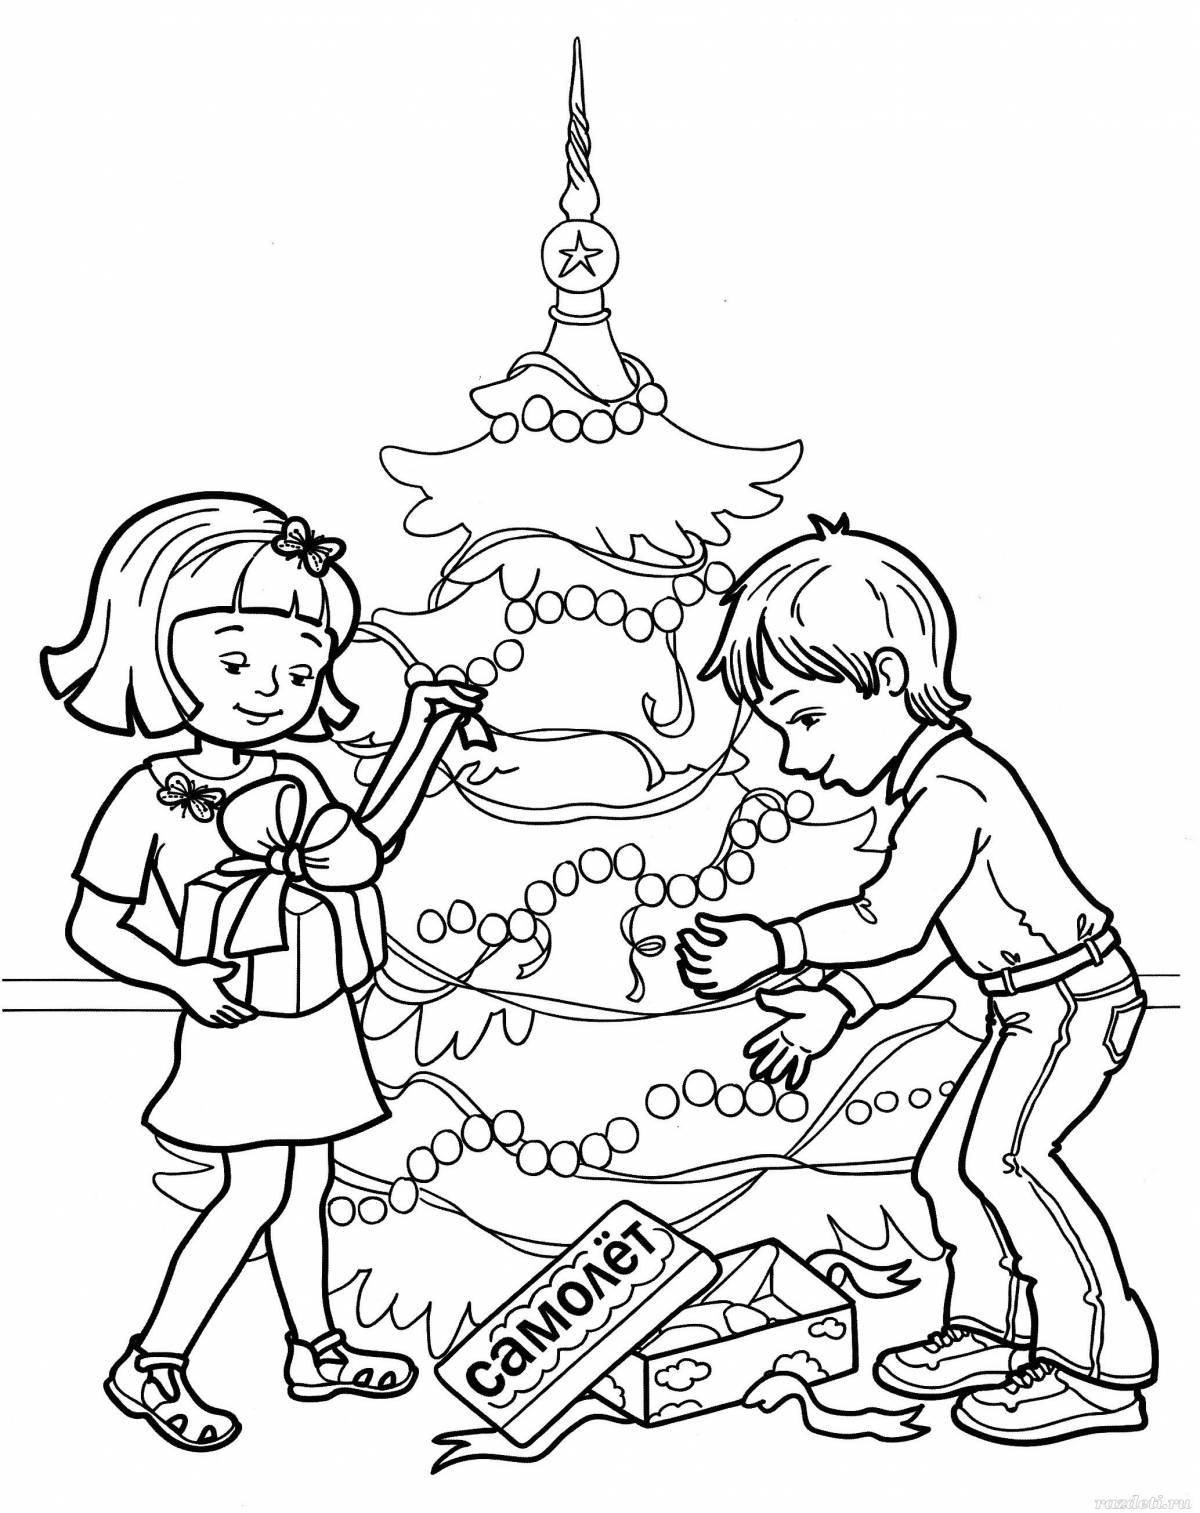 Children decorate the Christmas tree #3